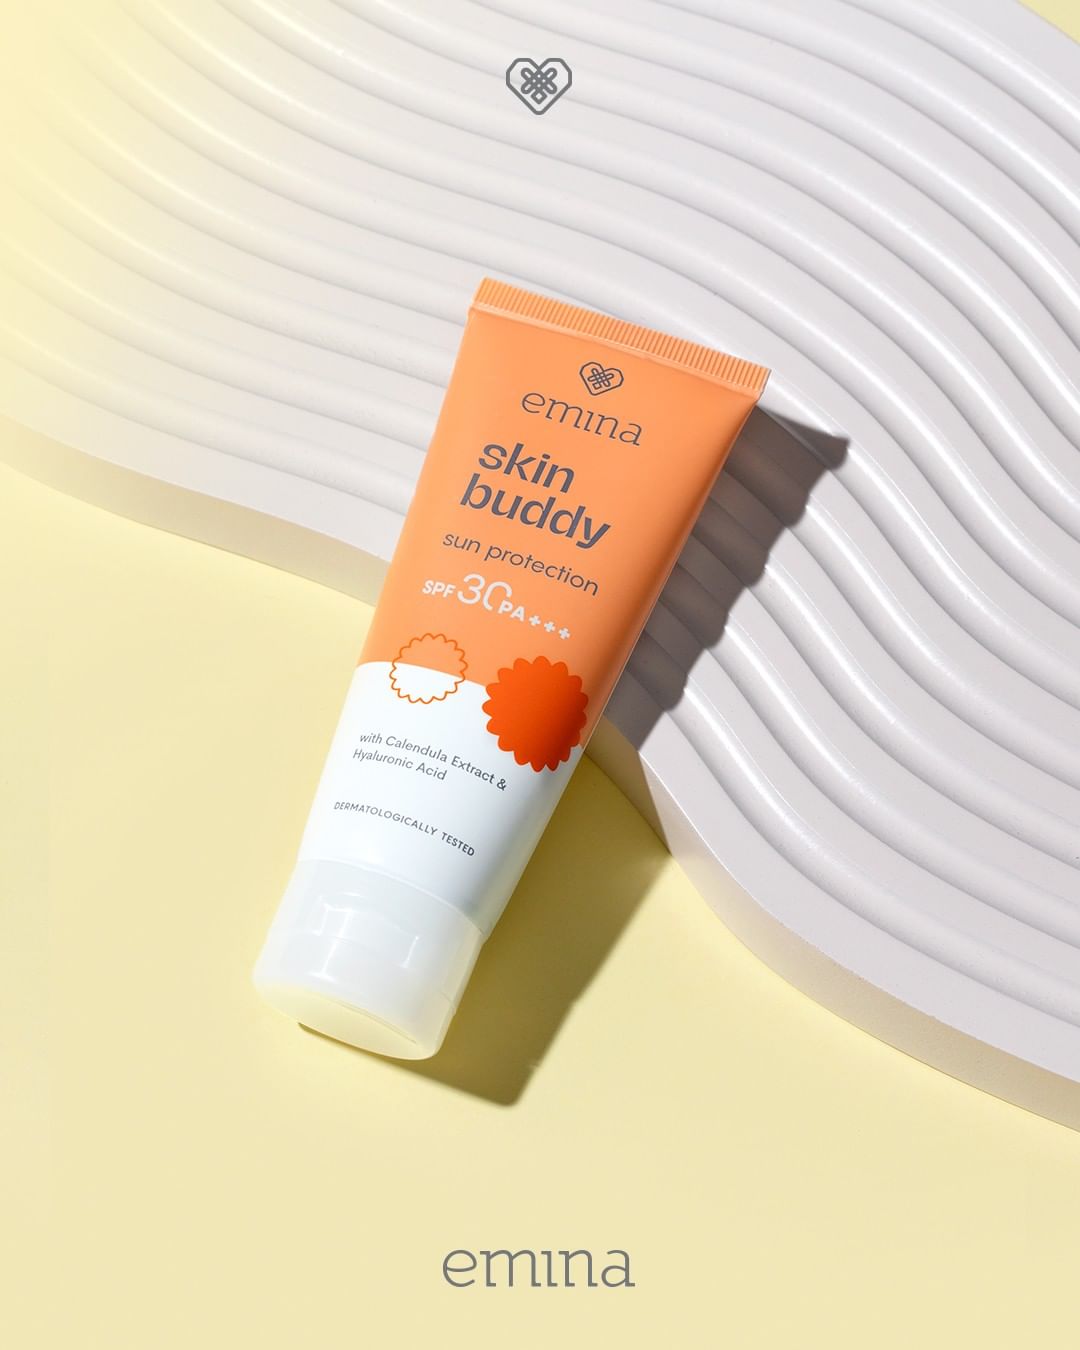 sunscreen untuk kulit kering, emina skin buddy sun protection spf 30 PA+++